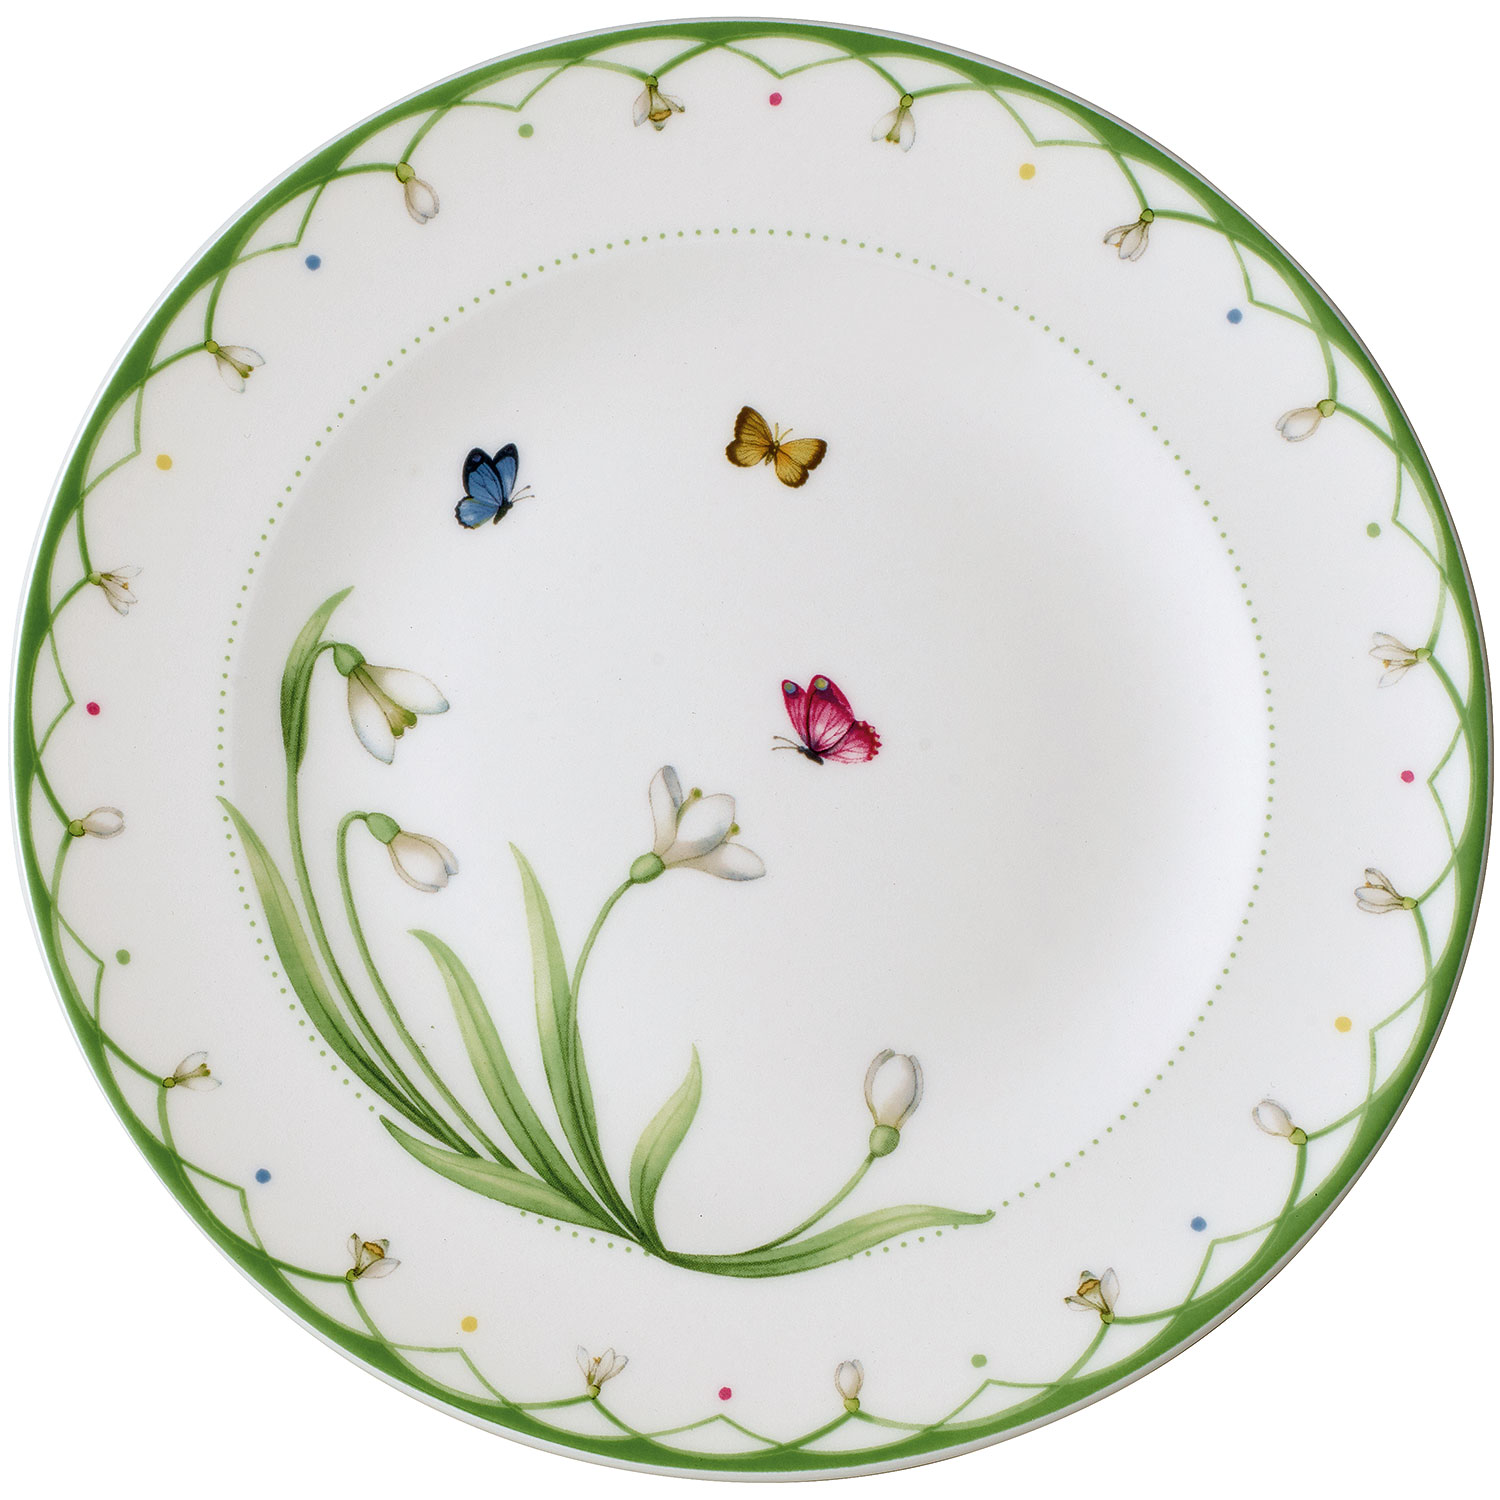 Colourful Spring Салатная тарелка